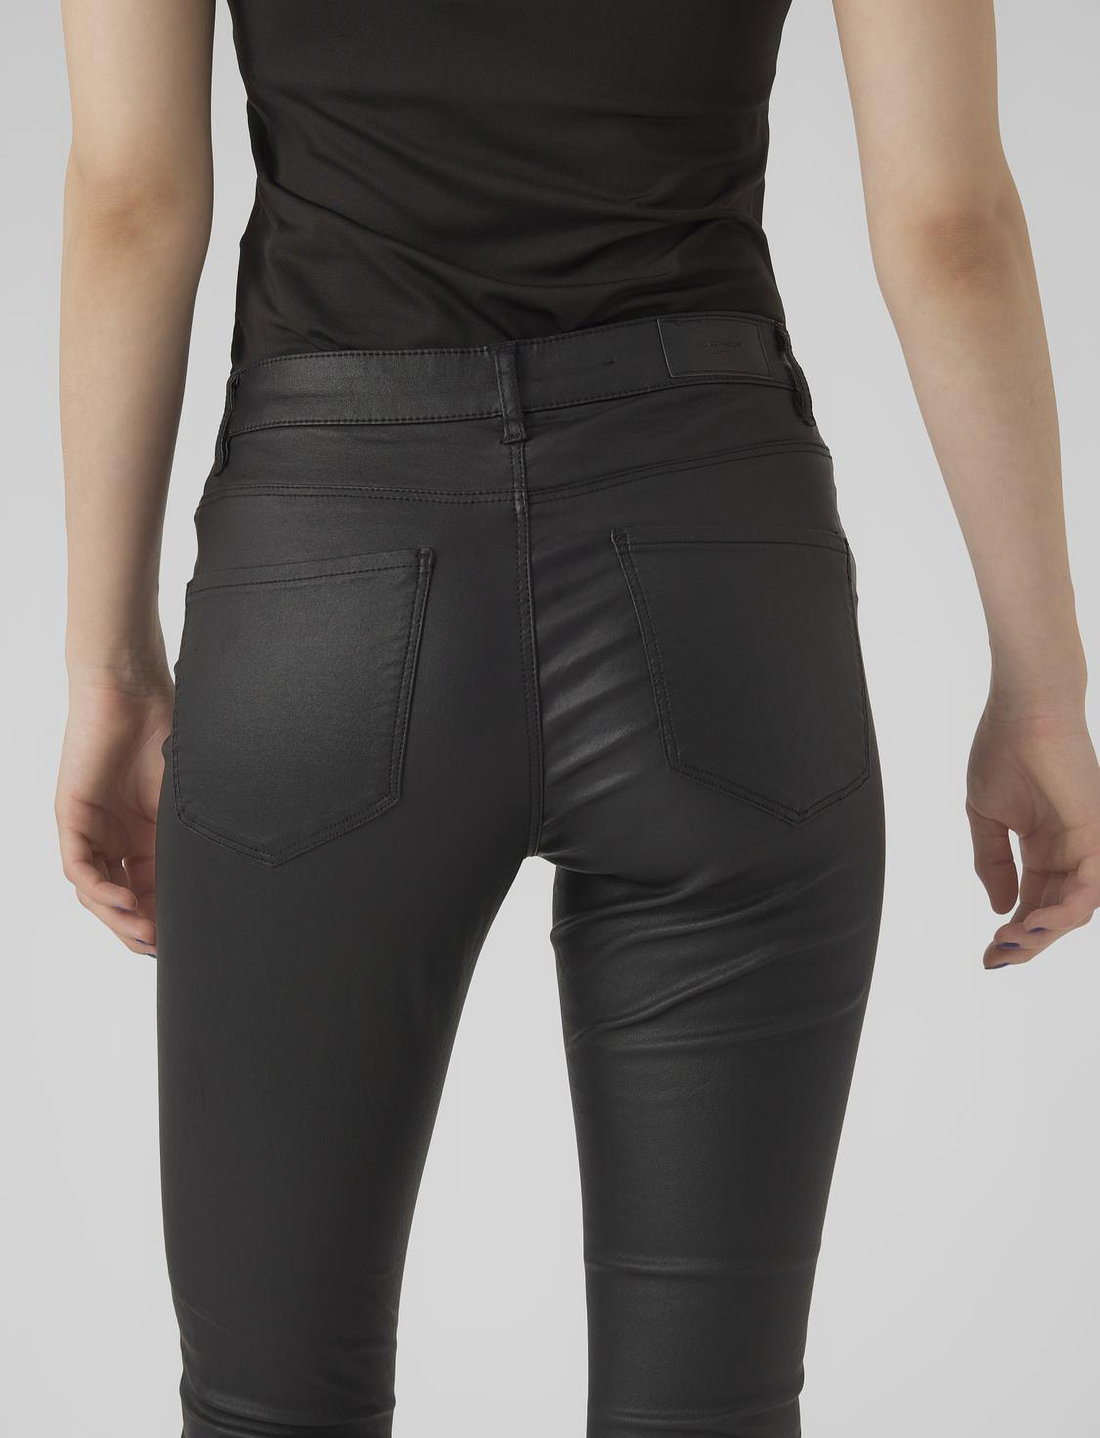 Vero Moda faux leather skinny pants in black - www.weeklybangalee.com